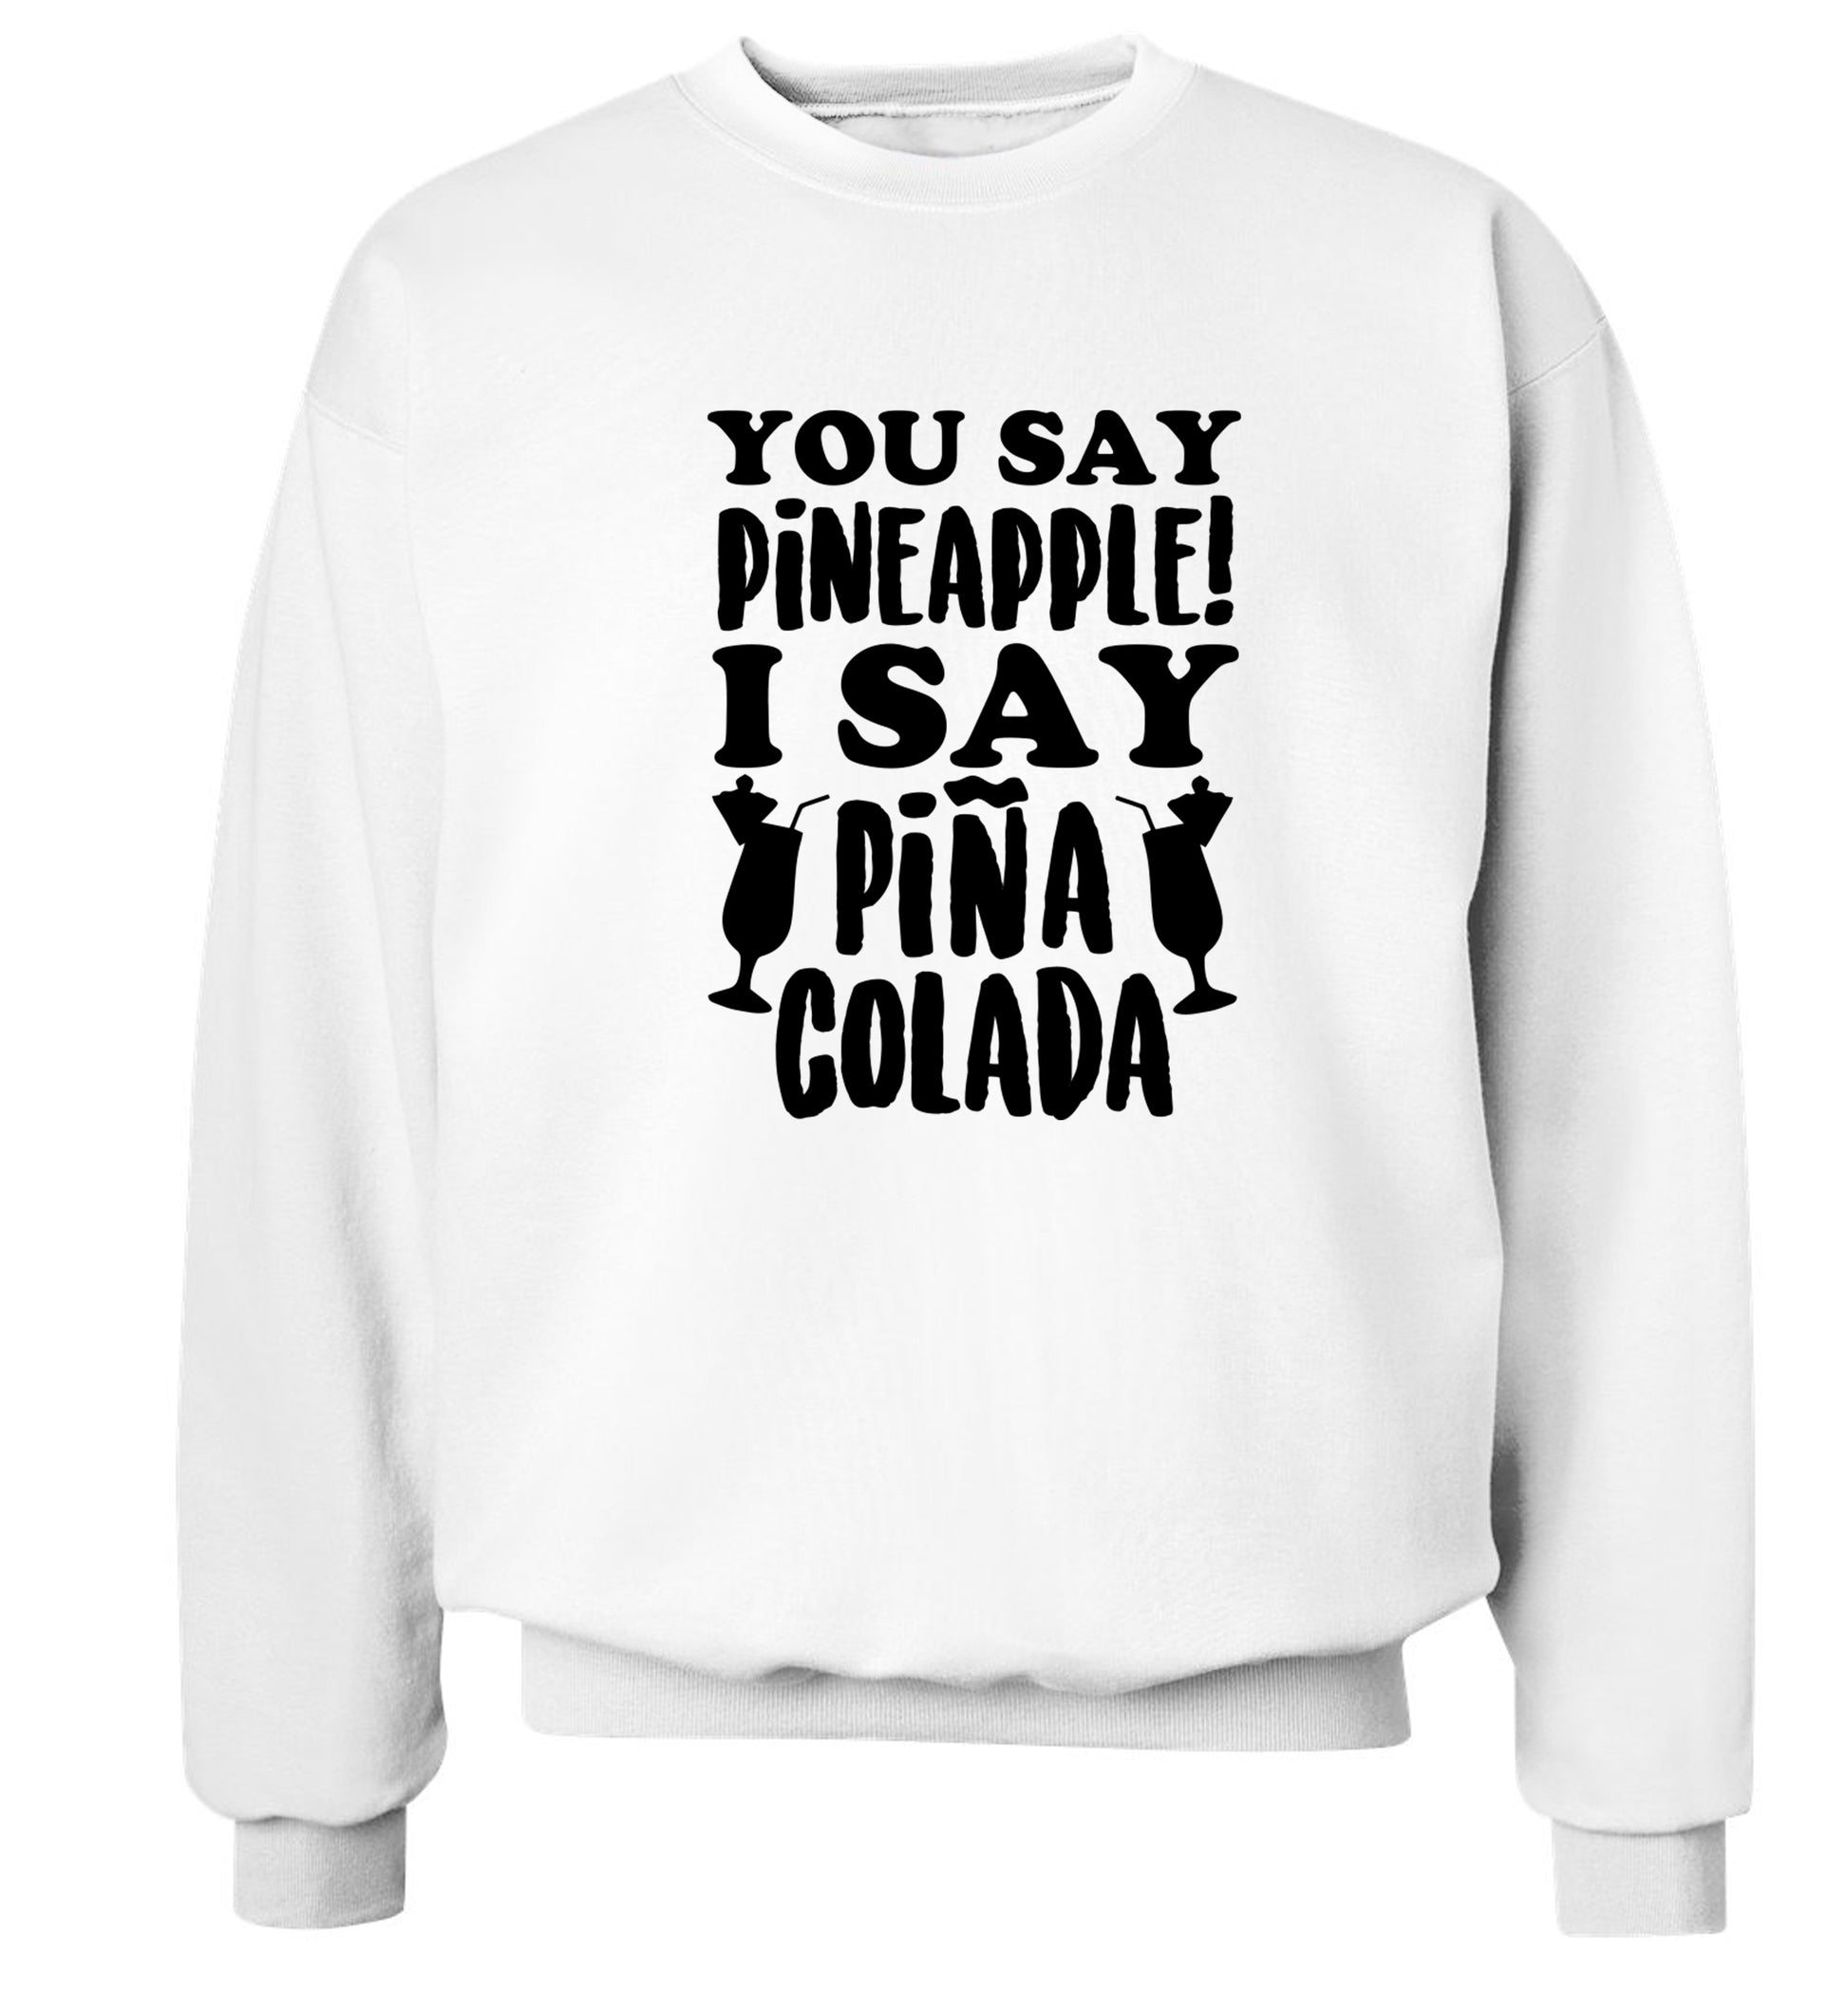 You say pinapple I say Pina colada Adult's unisex white Sweater 2XL